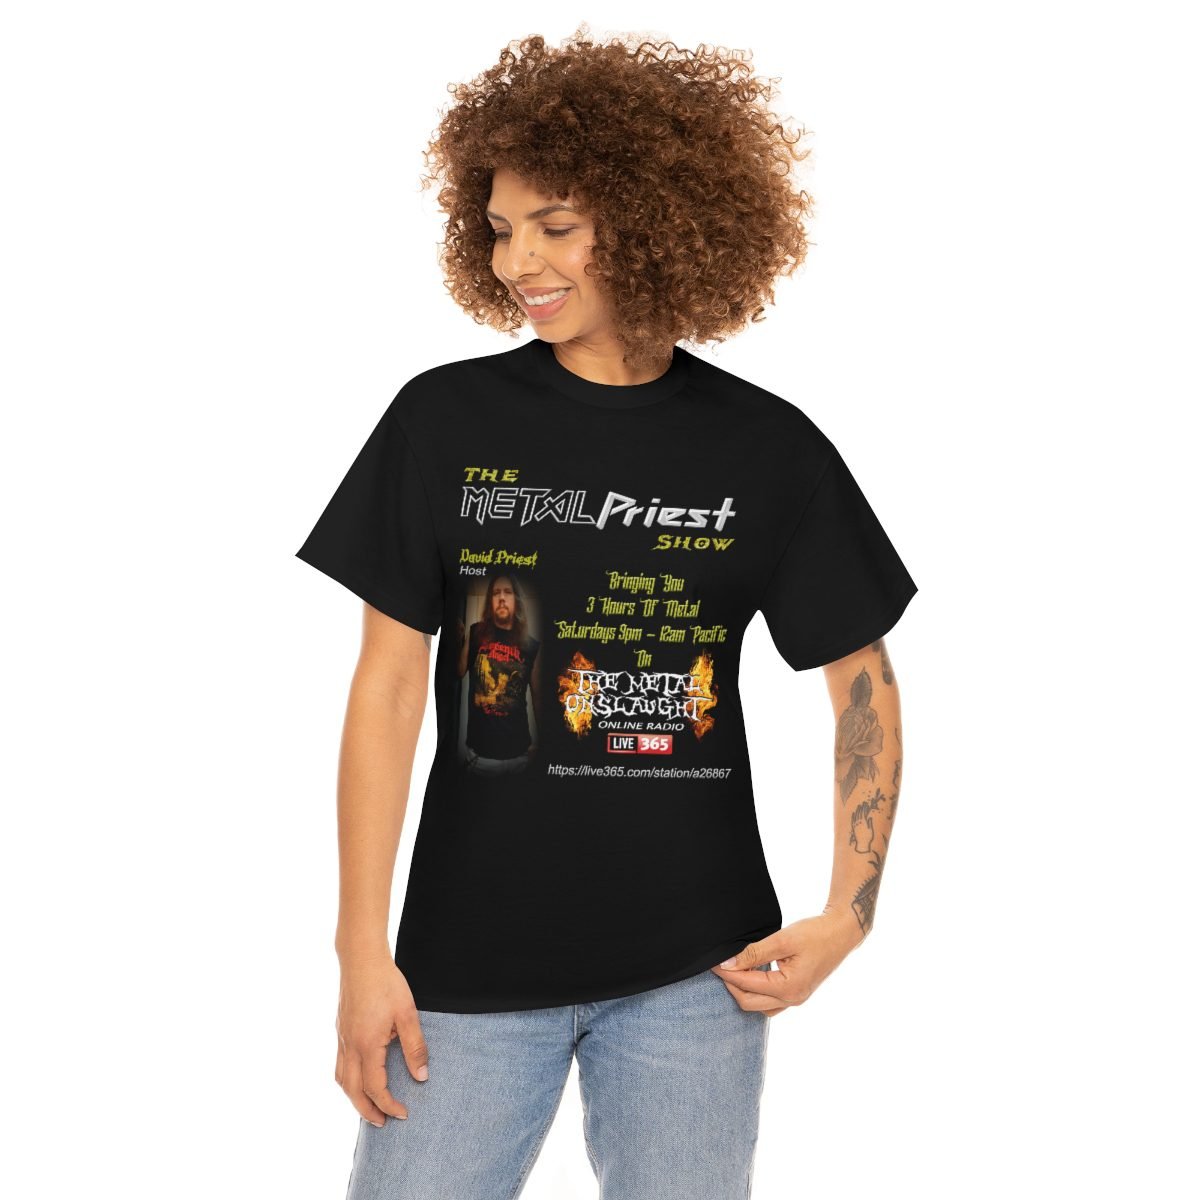 The Metal Priest Show Short Sleeve T-shirt (5000)